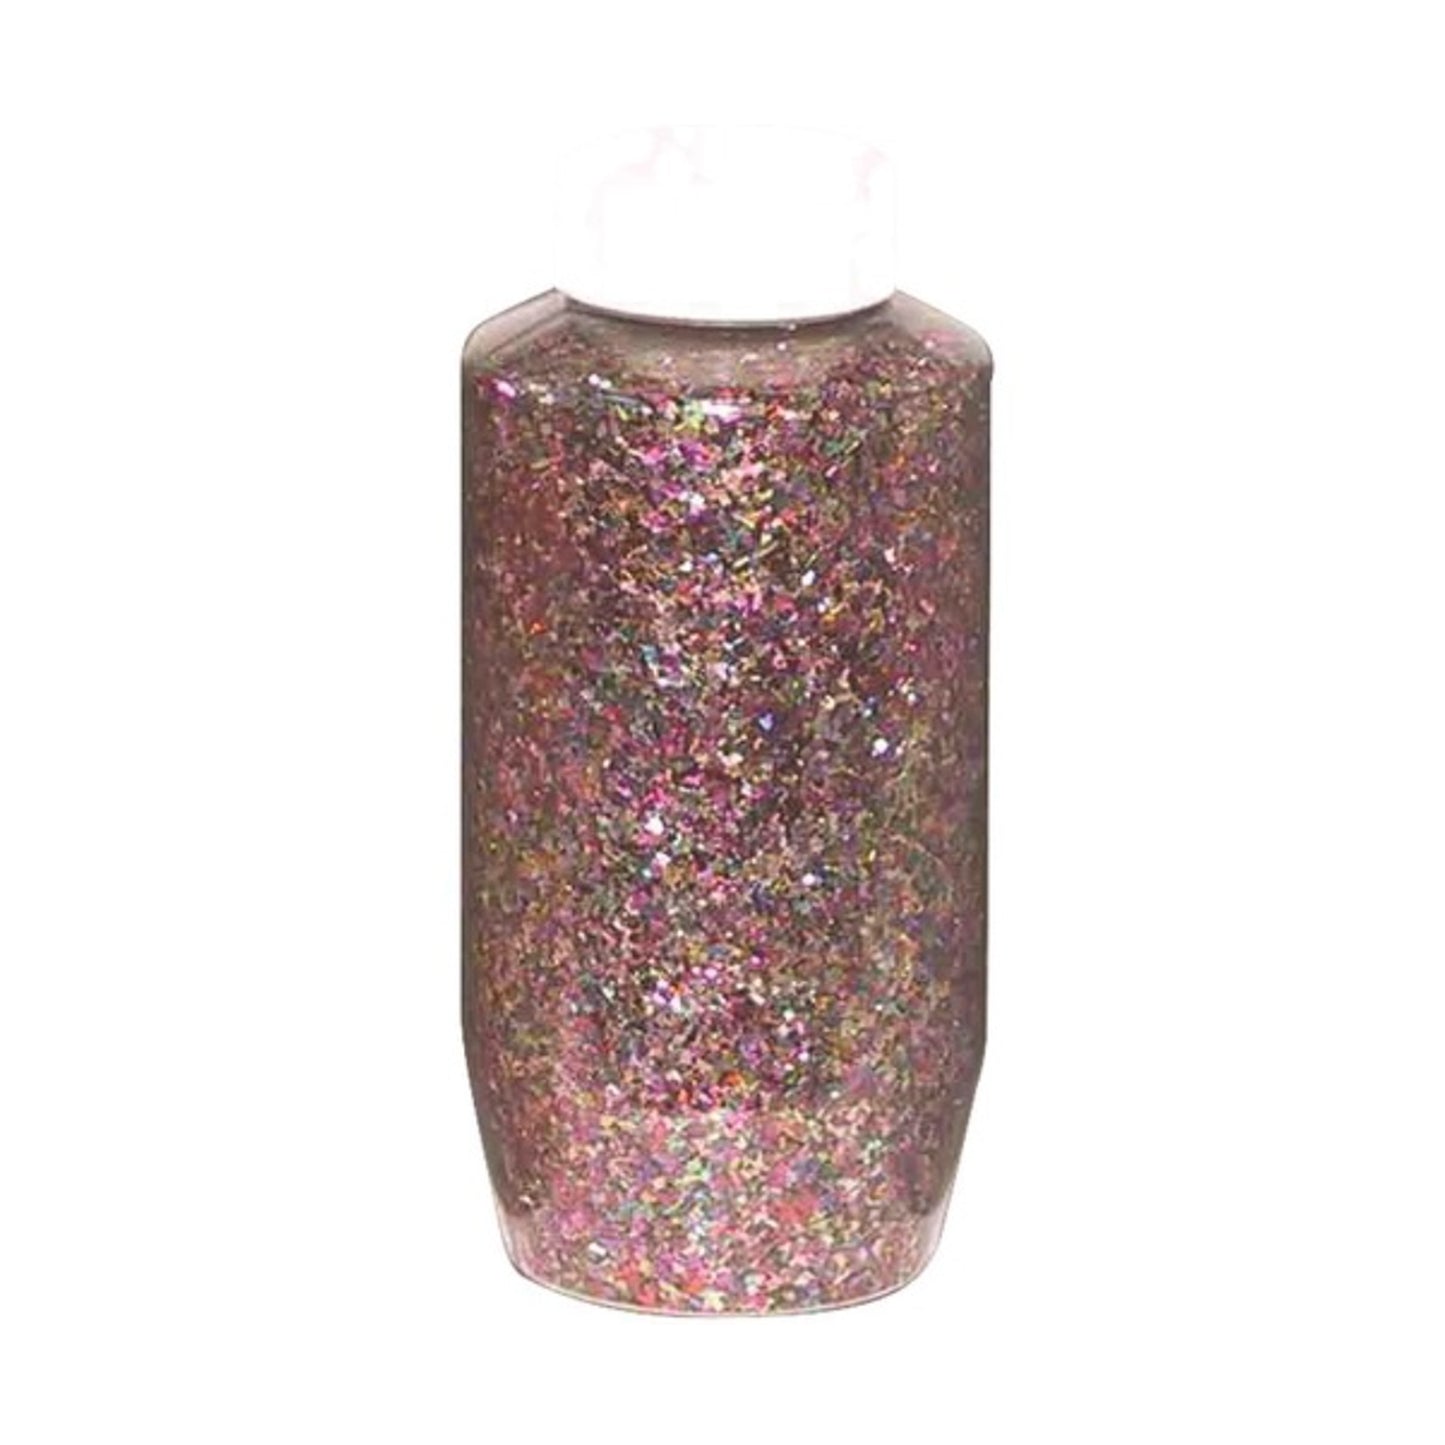 456 gr. Jar of Glitter